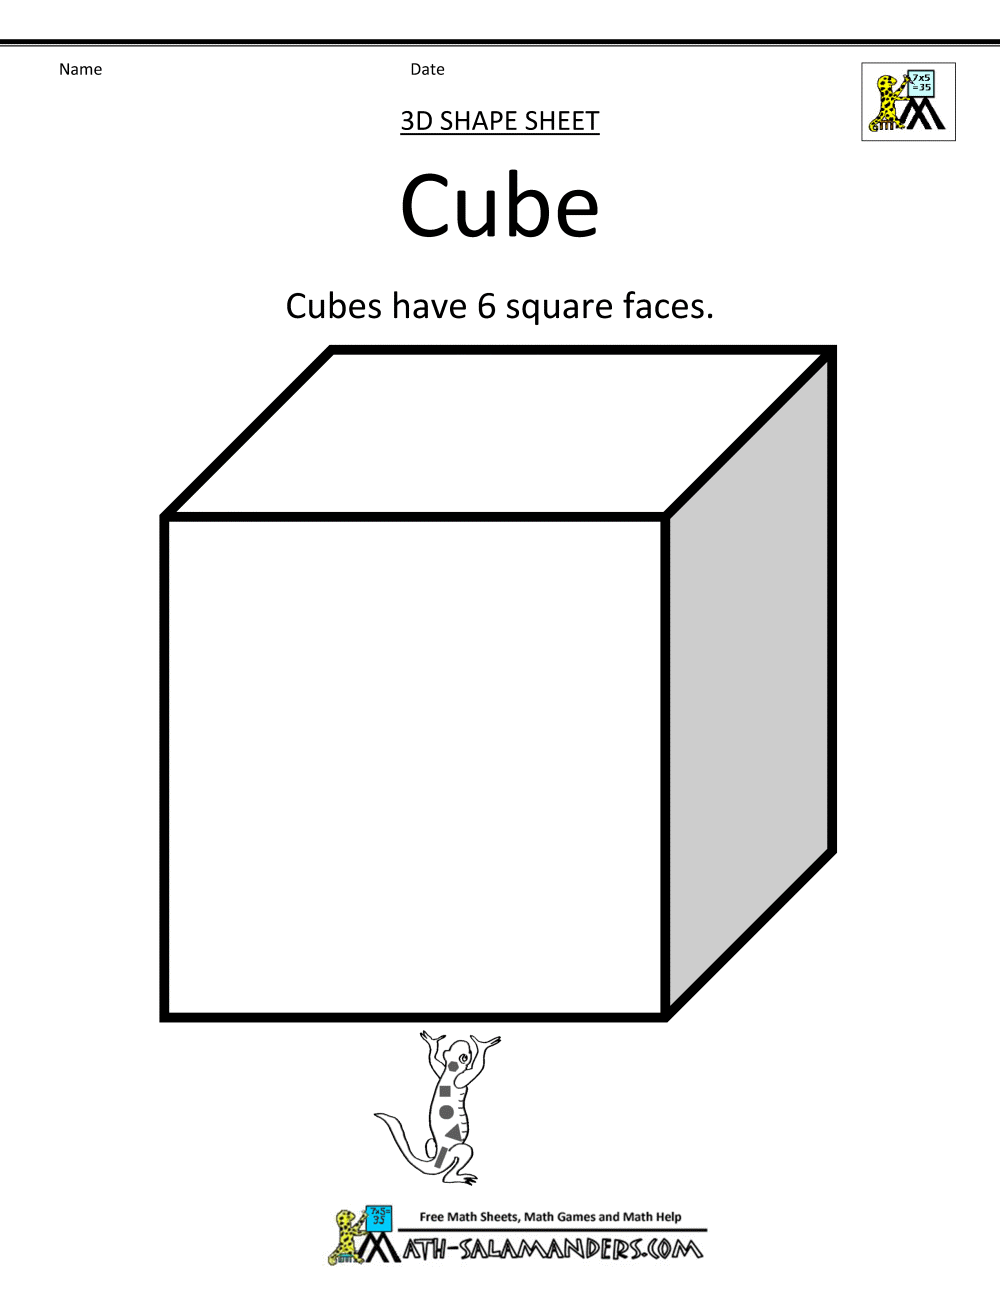 Cube shape clipart 